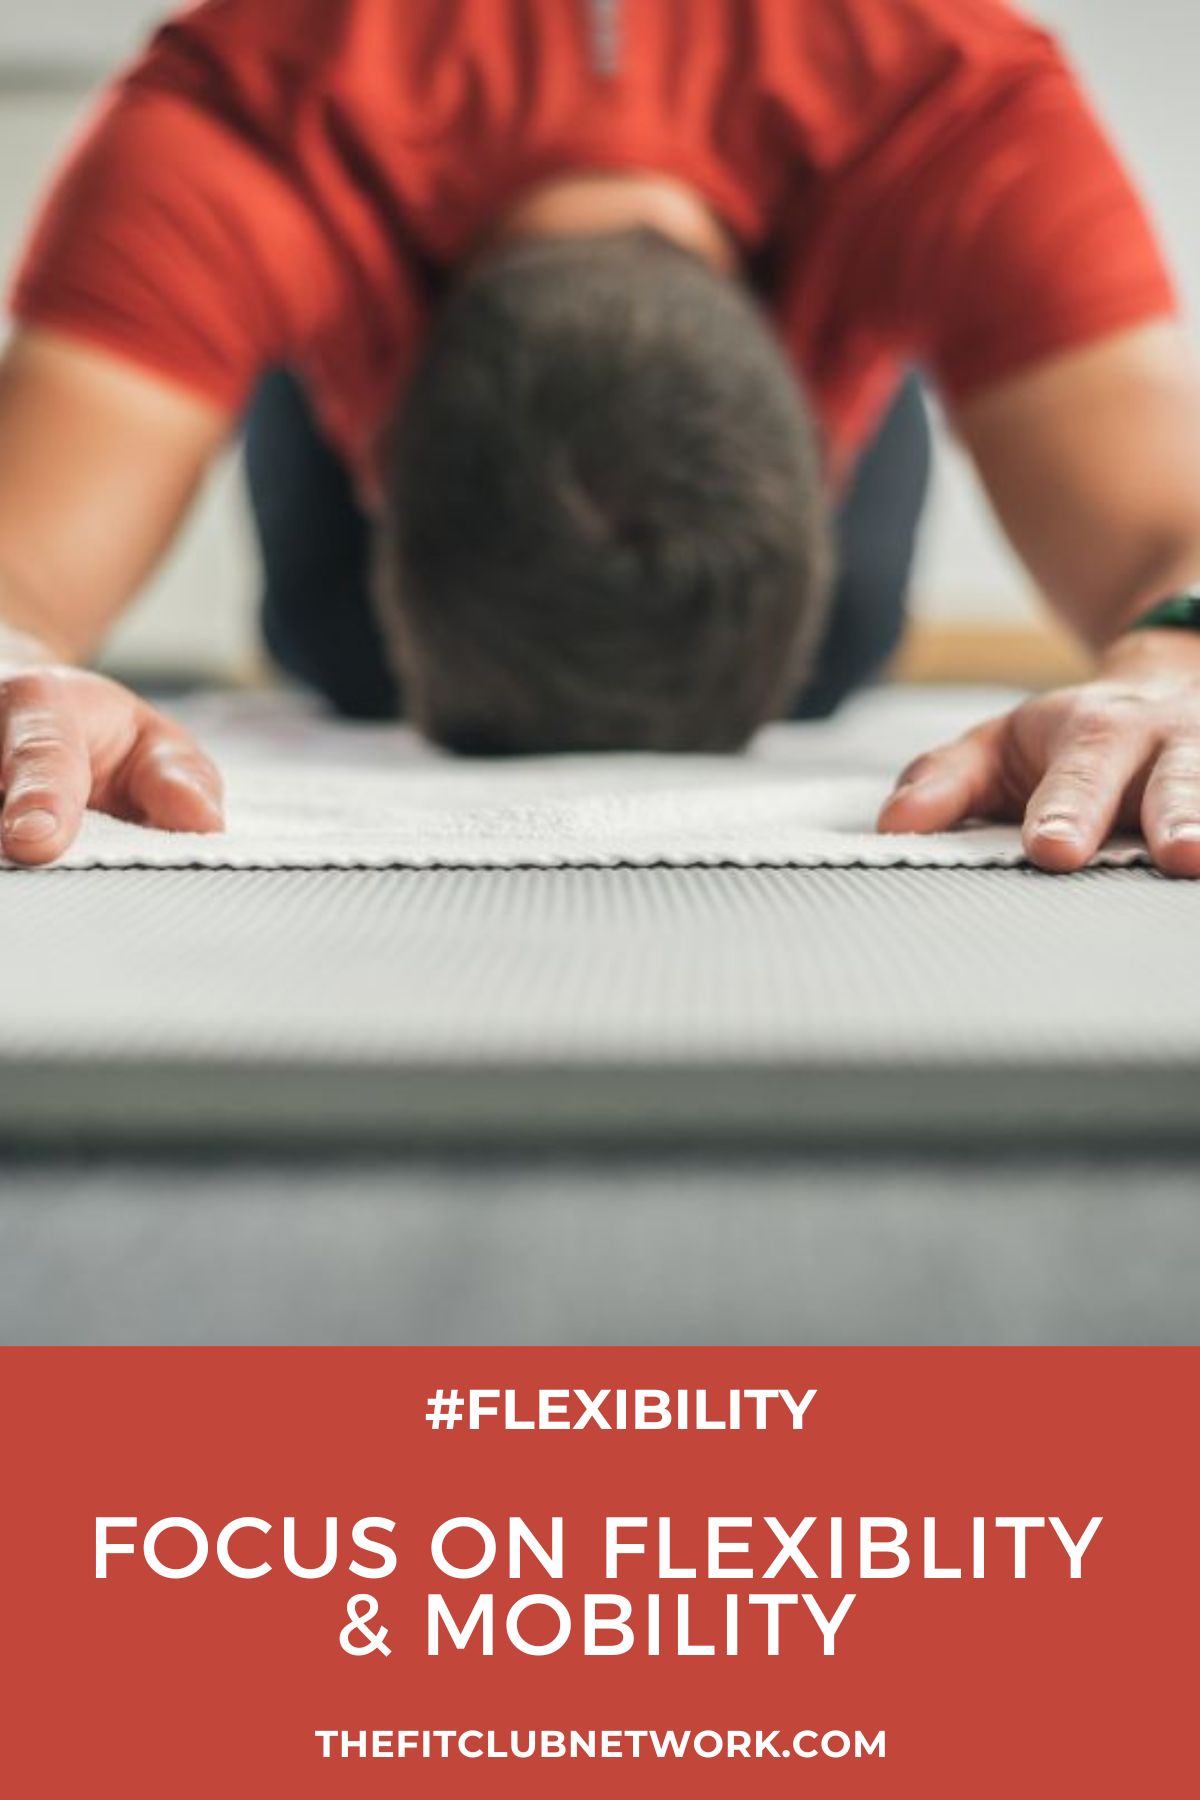 Focus on Flexiblity & Mobility | THEFITCLUBNETWORK.COM